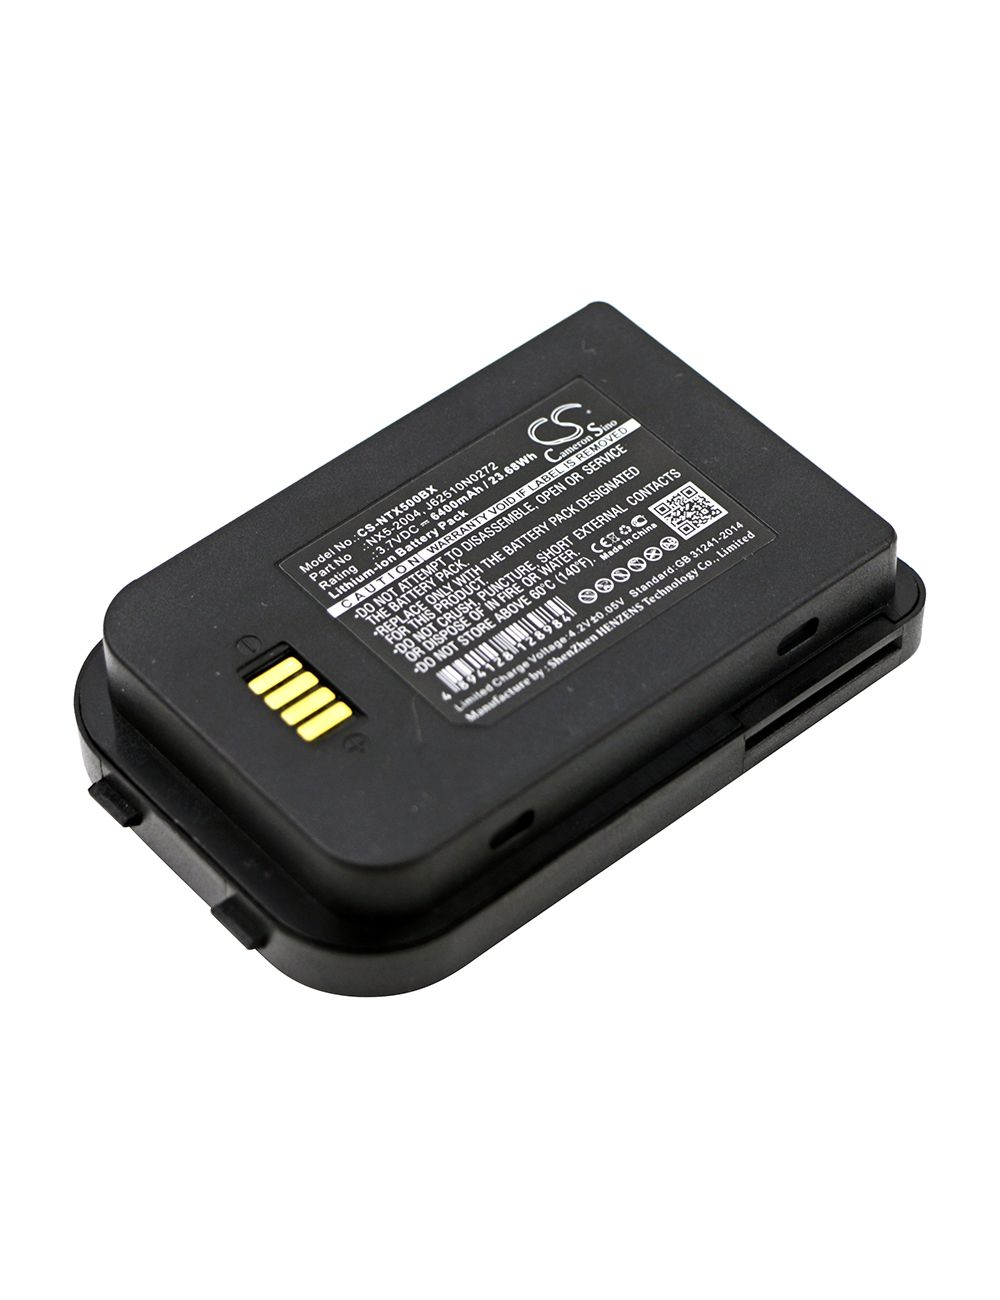 Batería para Handheld Nautiz X5 eTicket. NX5-2004 3,7V 6400mAh - CS-NTX500BX -  - 4894128128984 - 1